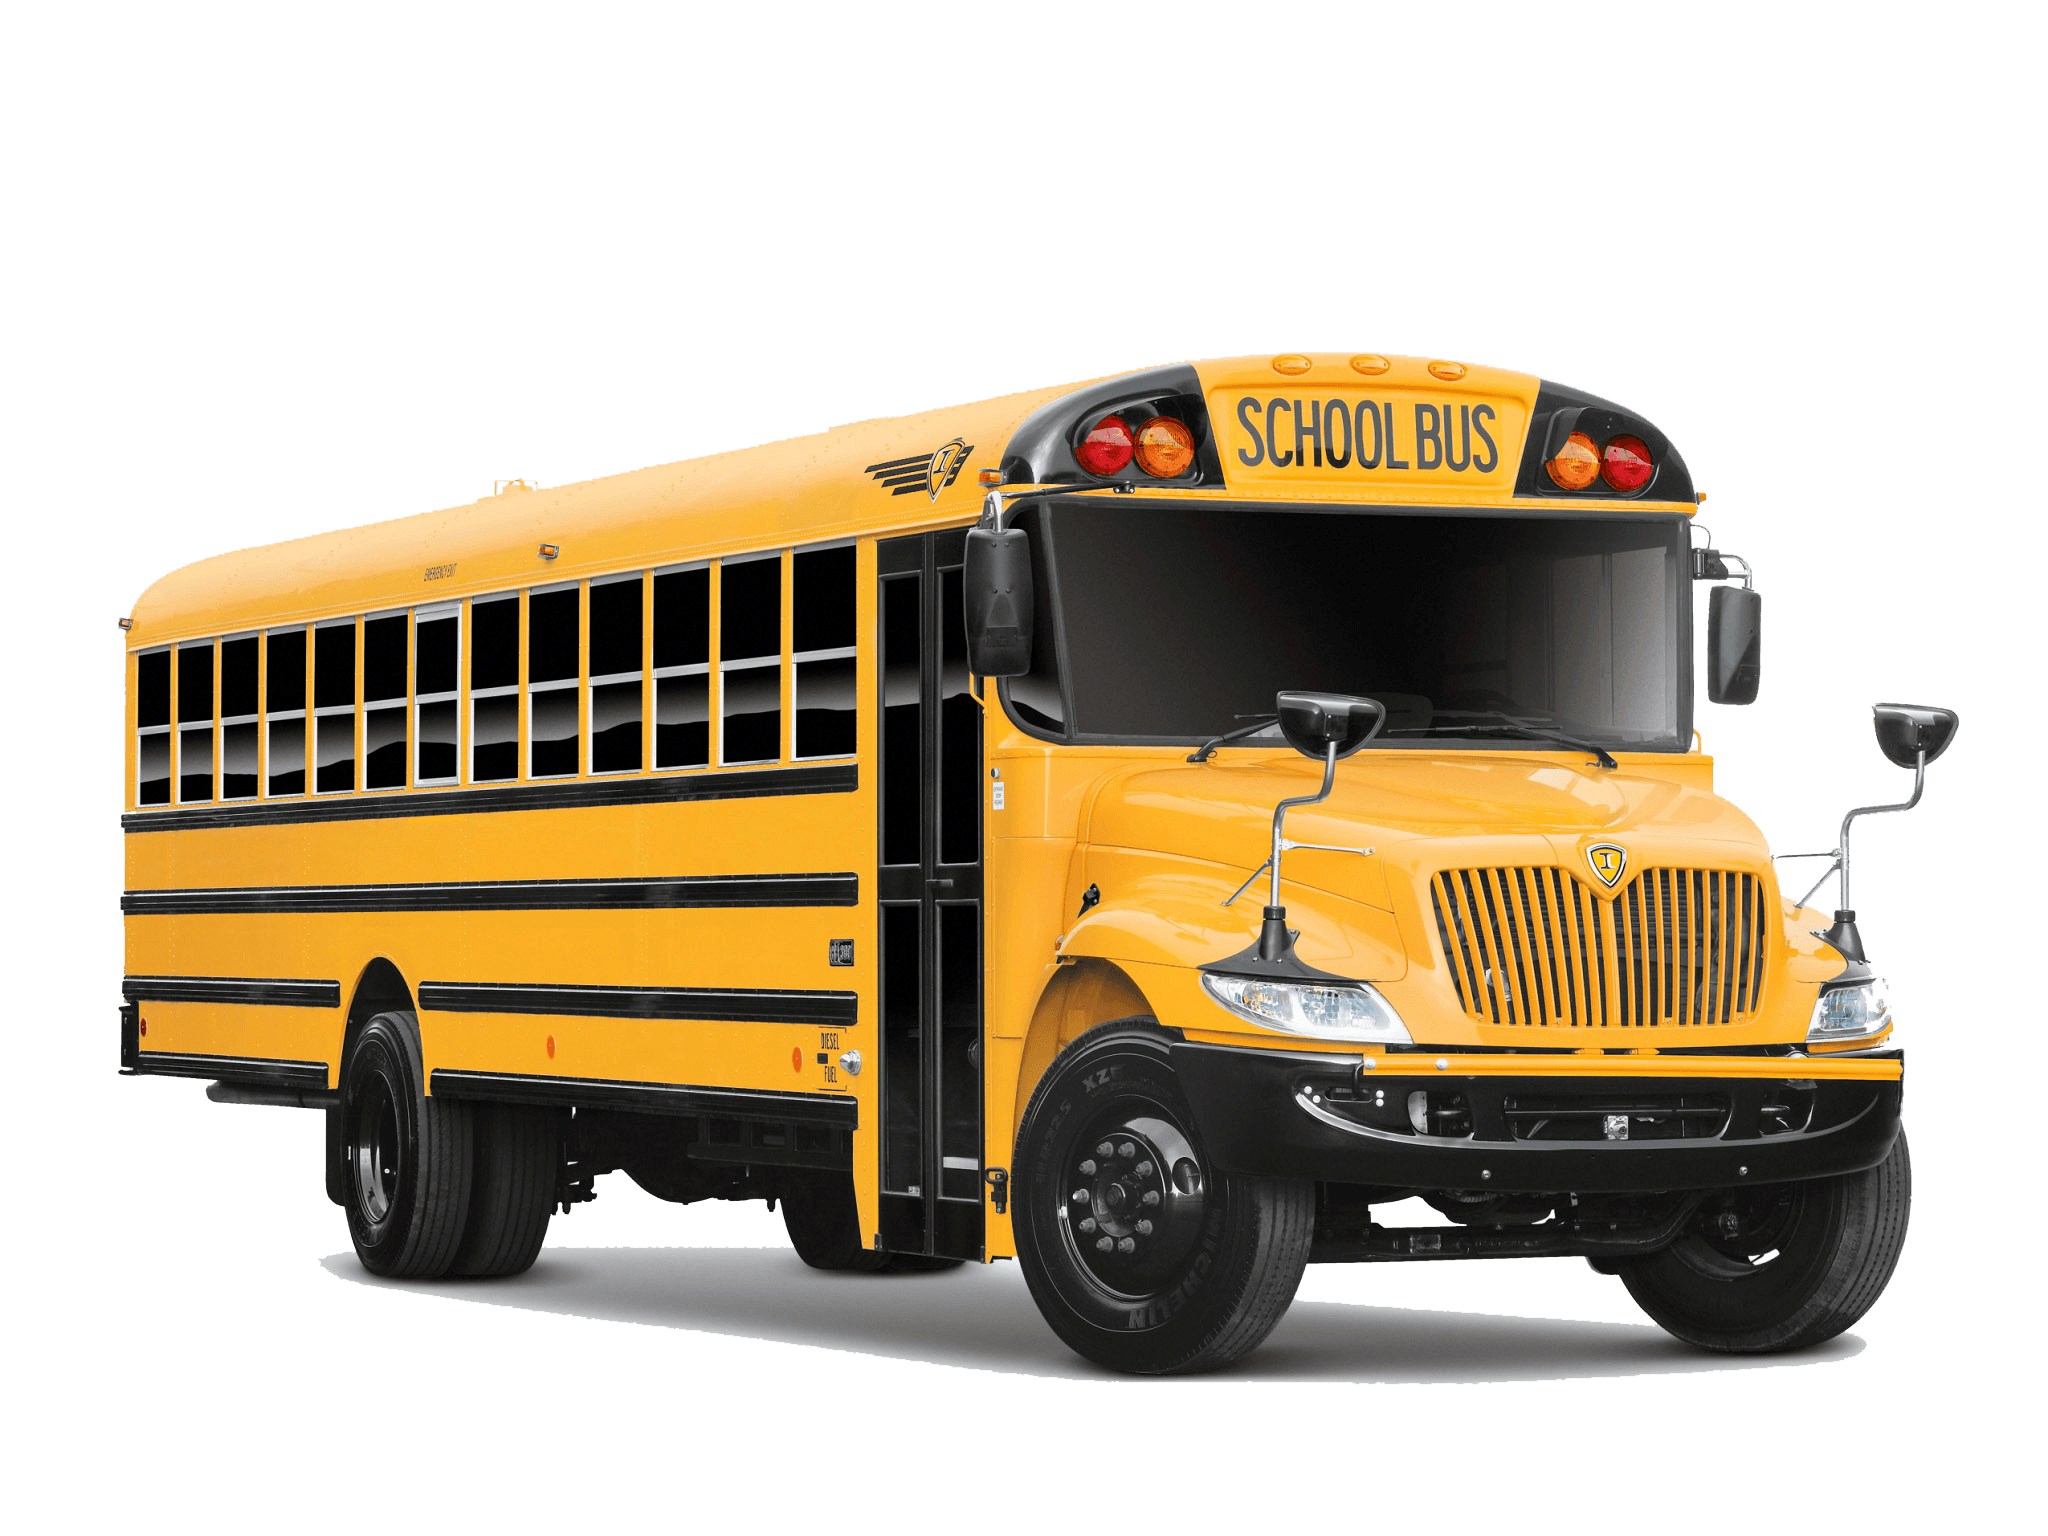 School bus illustration